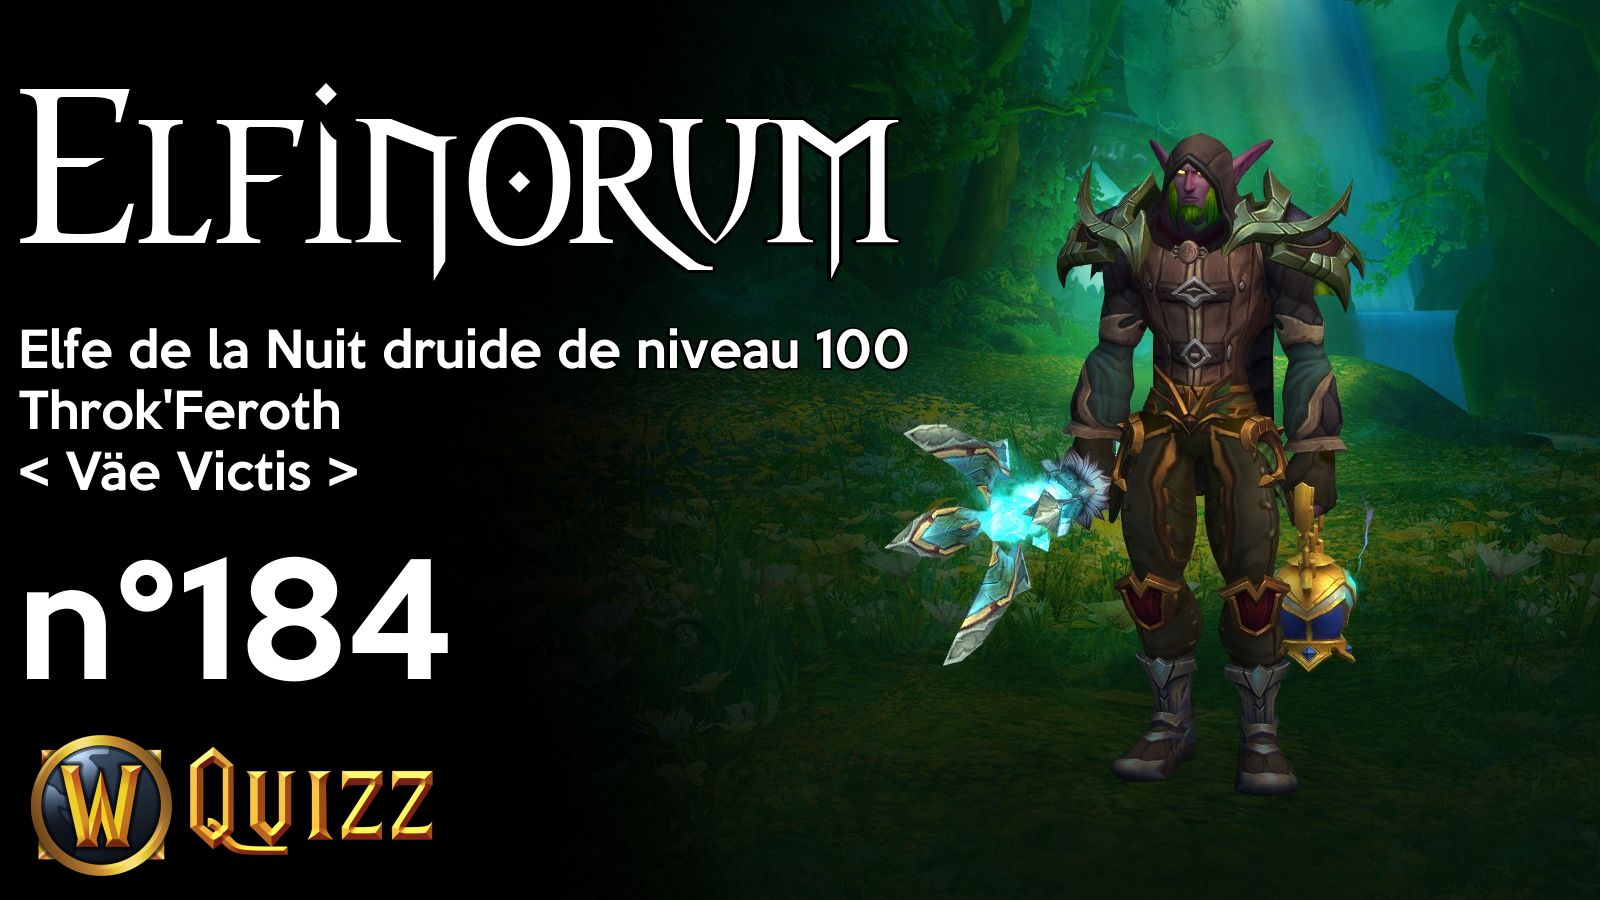 Elfinorum, Elfe de la Nuit druide de niveau 100, Throk'Feroth